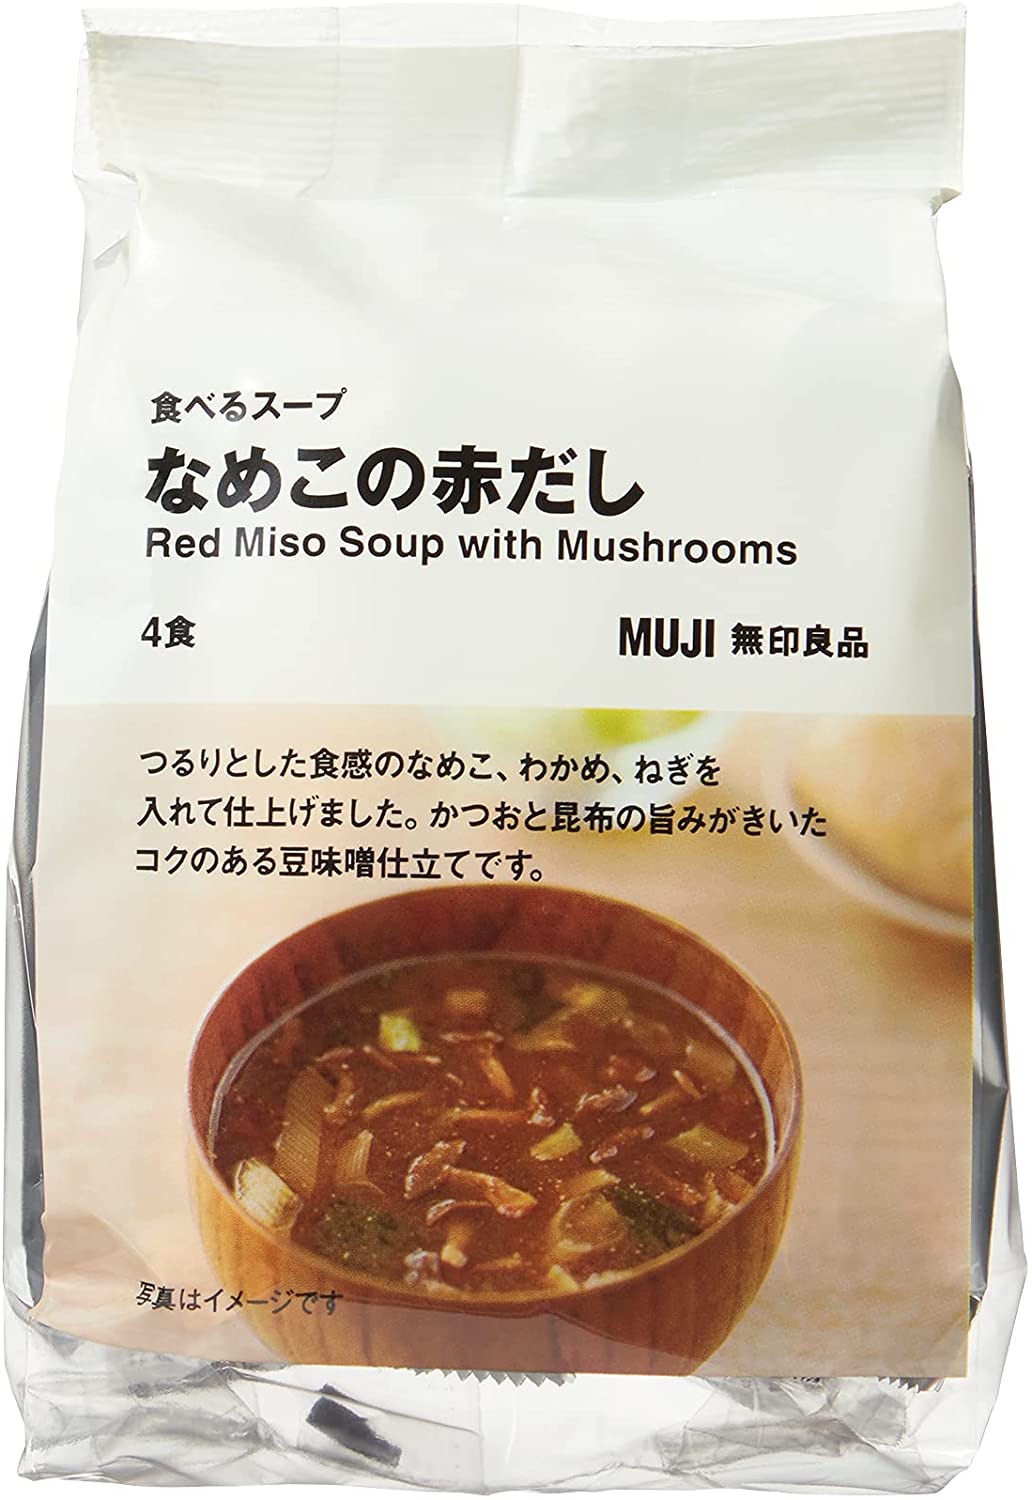 MUJI Freeze Dried Miso Soup Mushroom Green Onion Dietary Instant Food Japan 34g